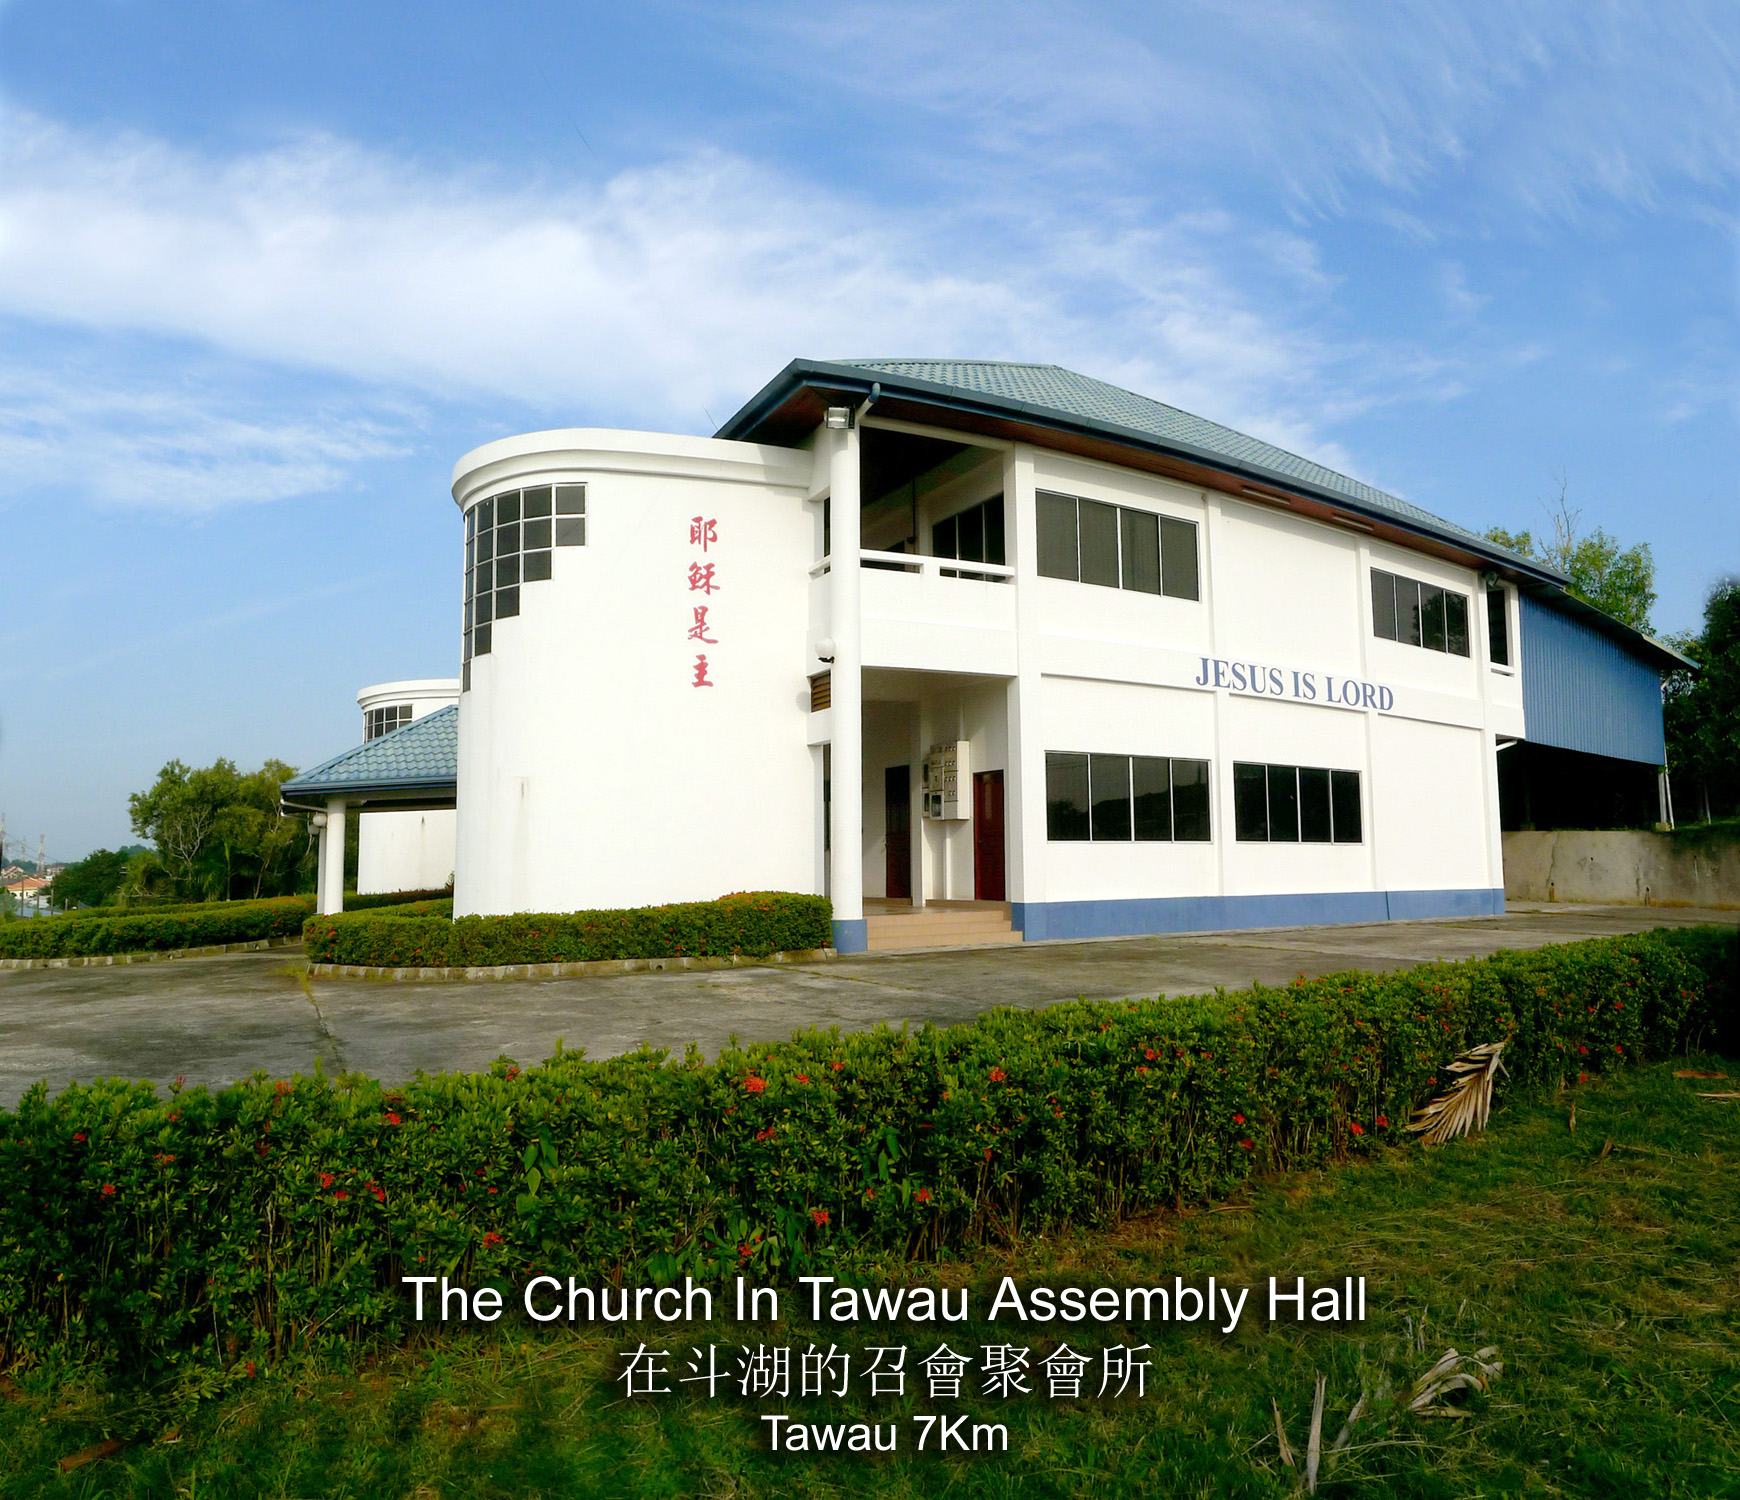 The Church In Tawau Assembly Hall 在斗湖的召會聚會所